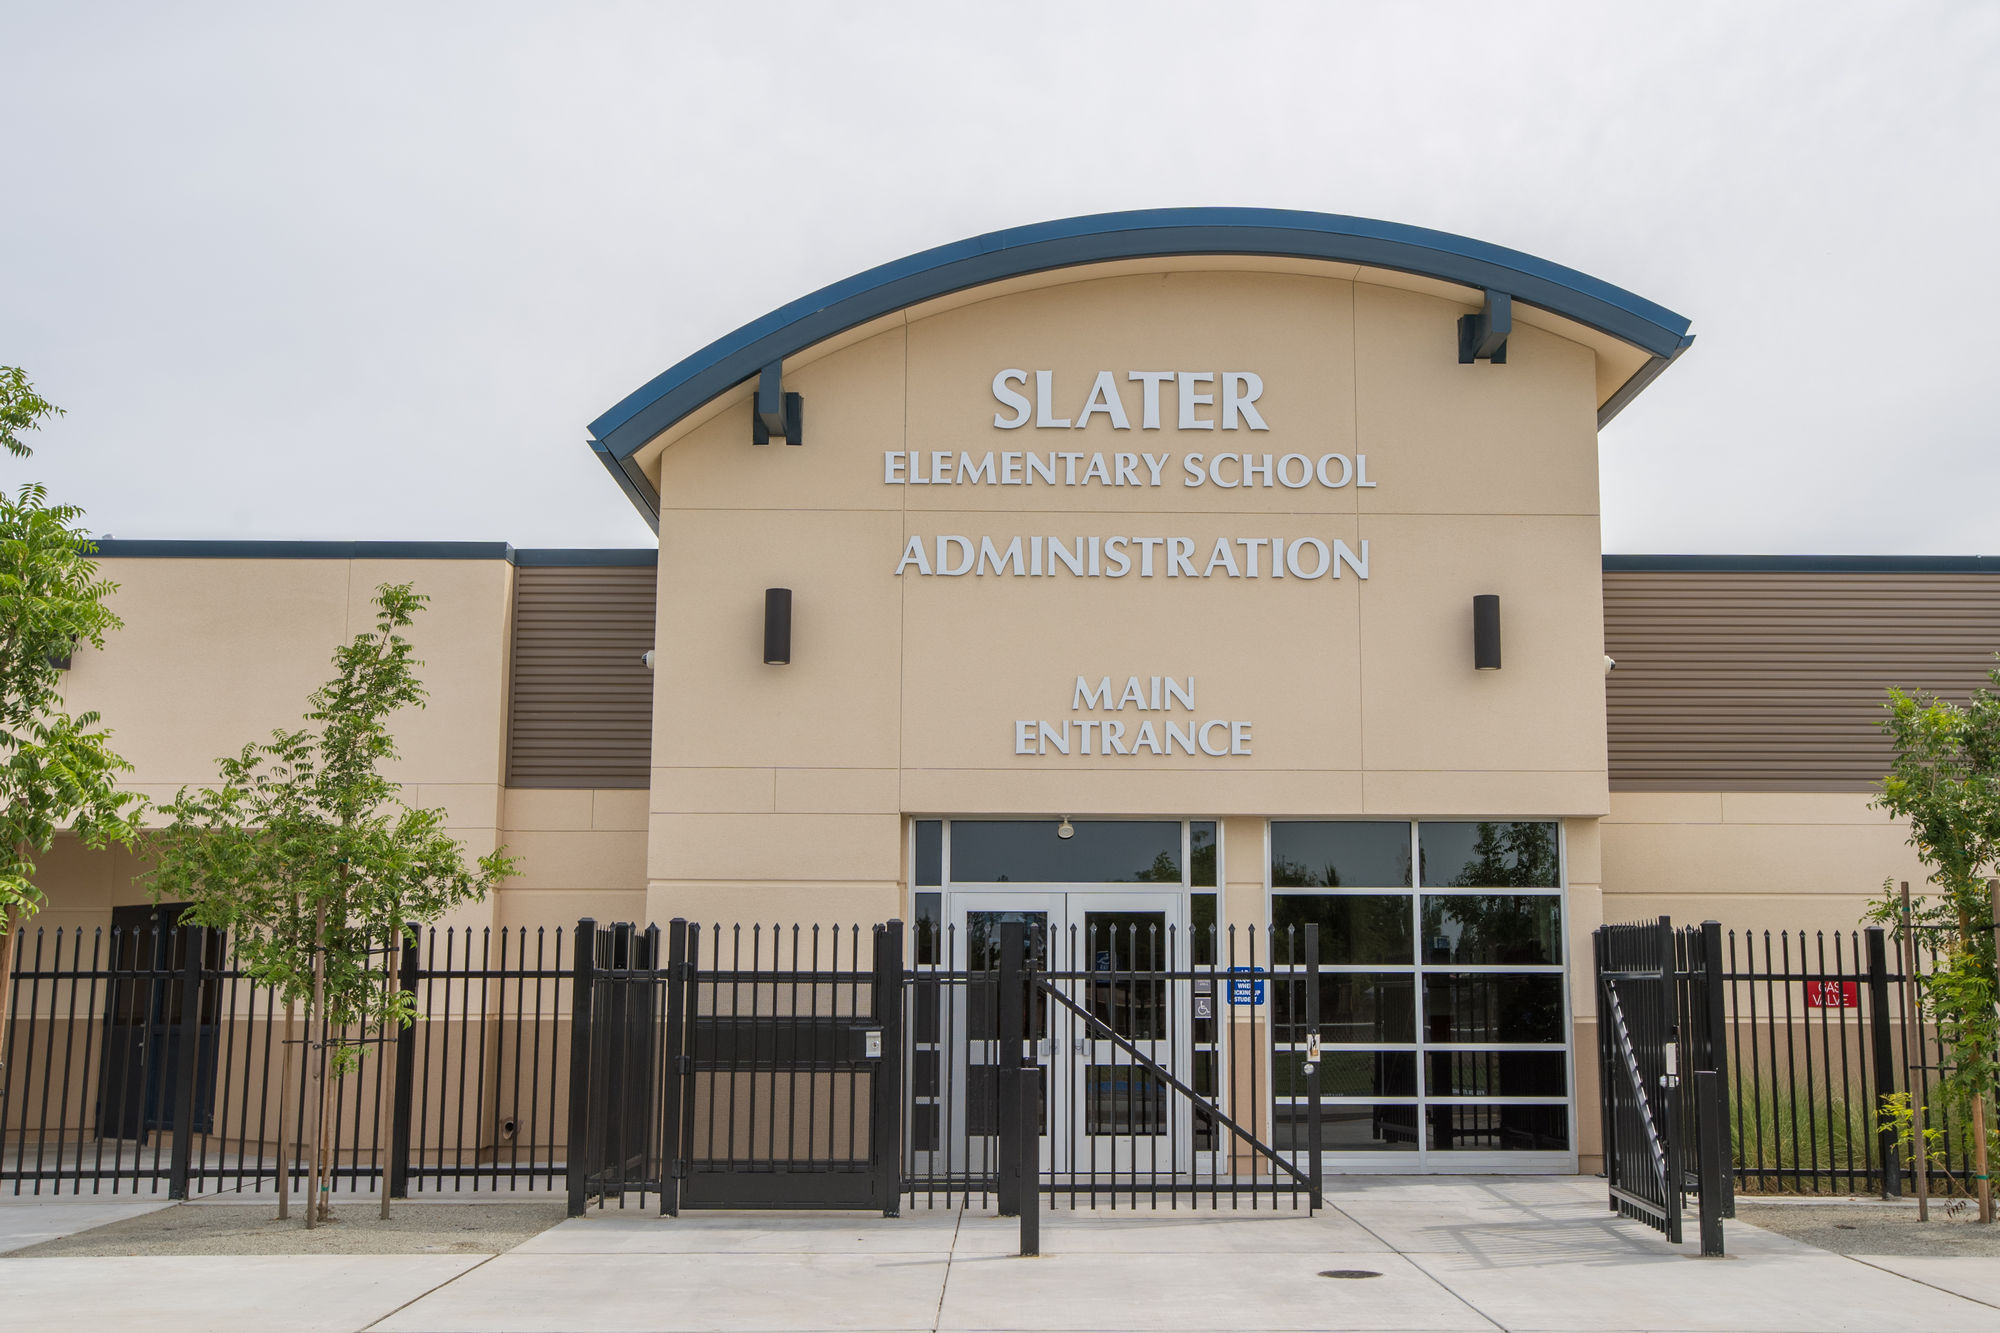 Slater Elementary School